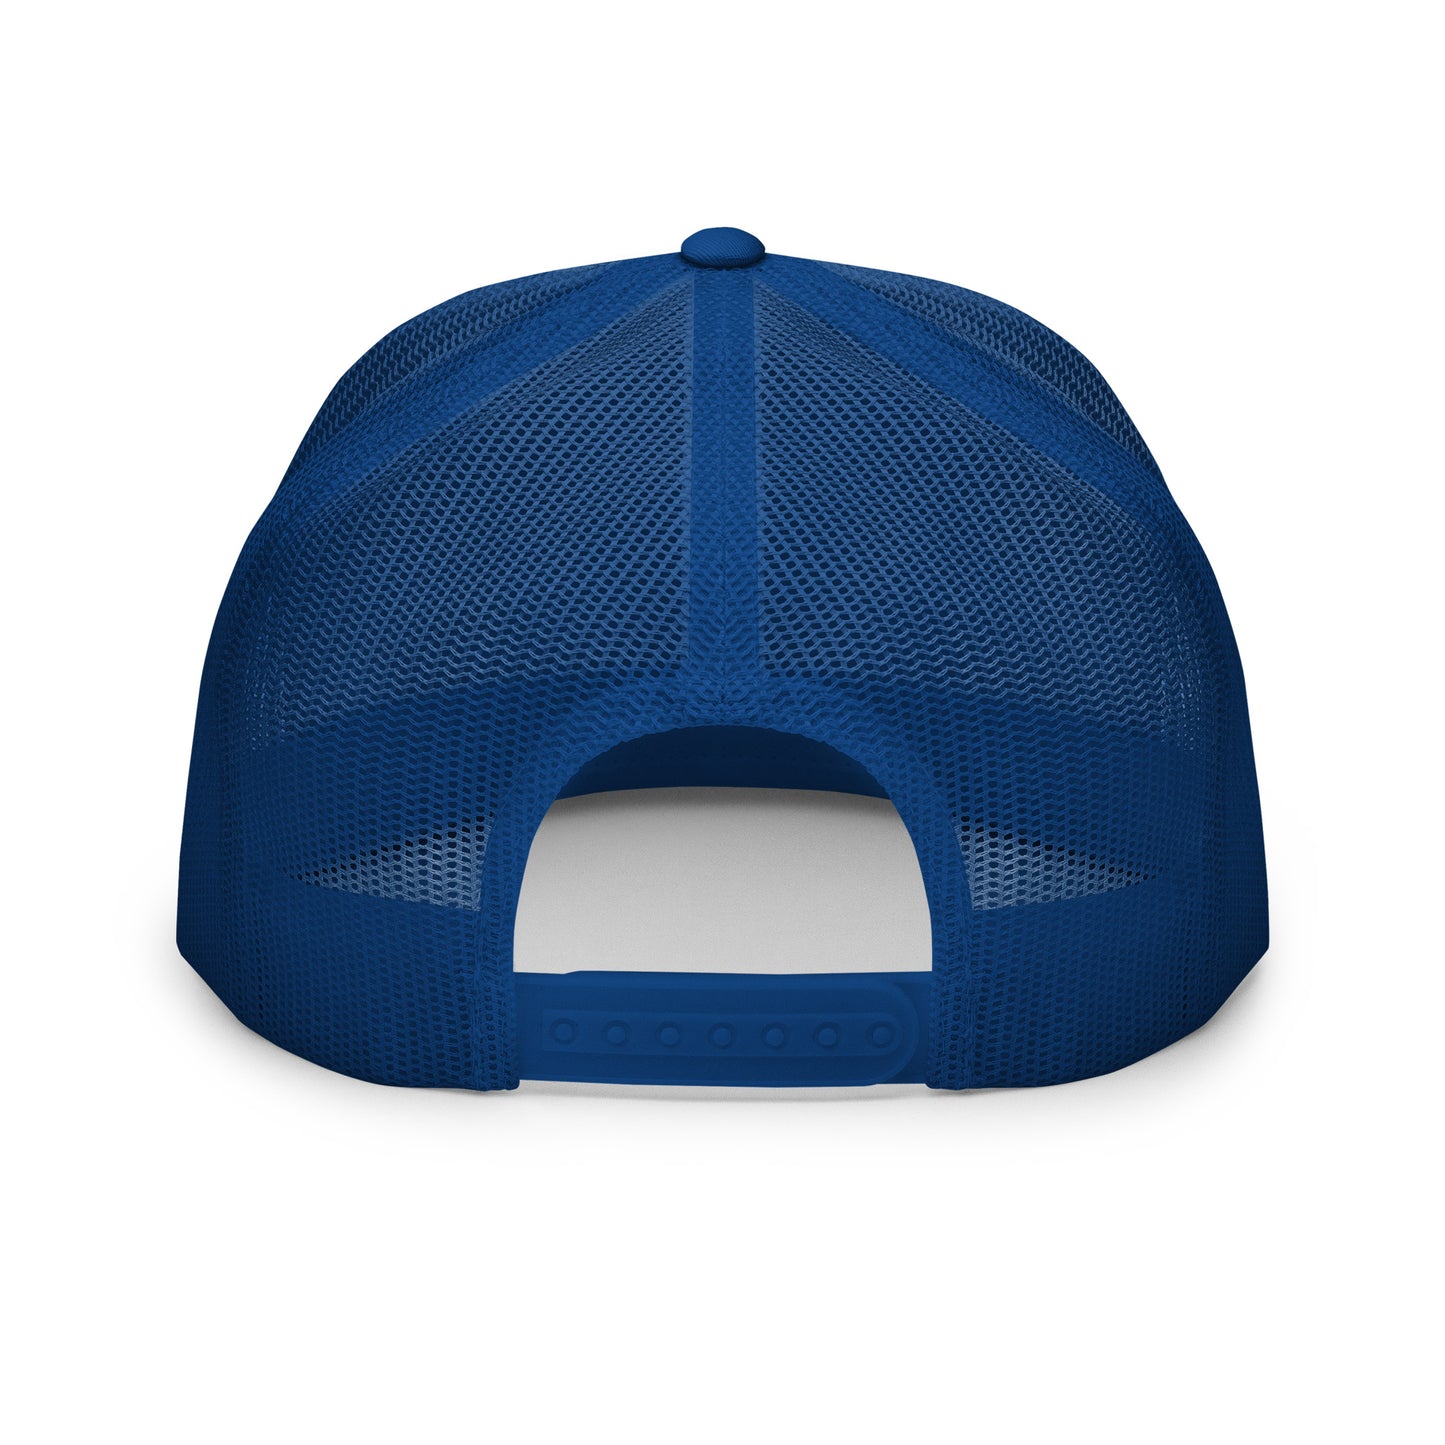 Breathable Cap: Lightweight, Adjustable, Sun-Safe & Clear Vision